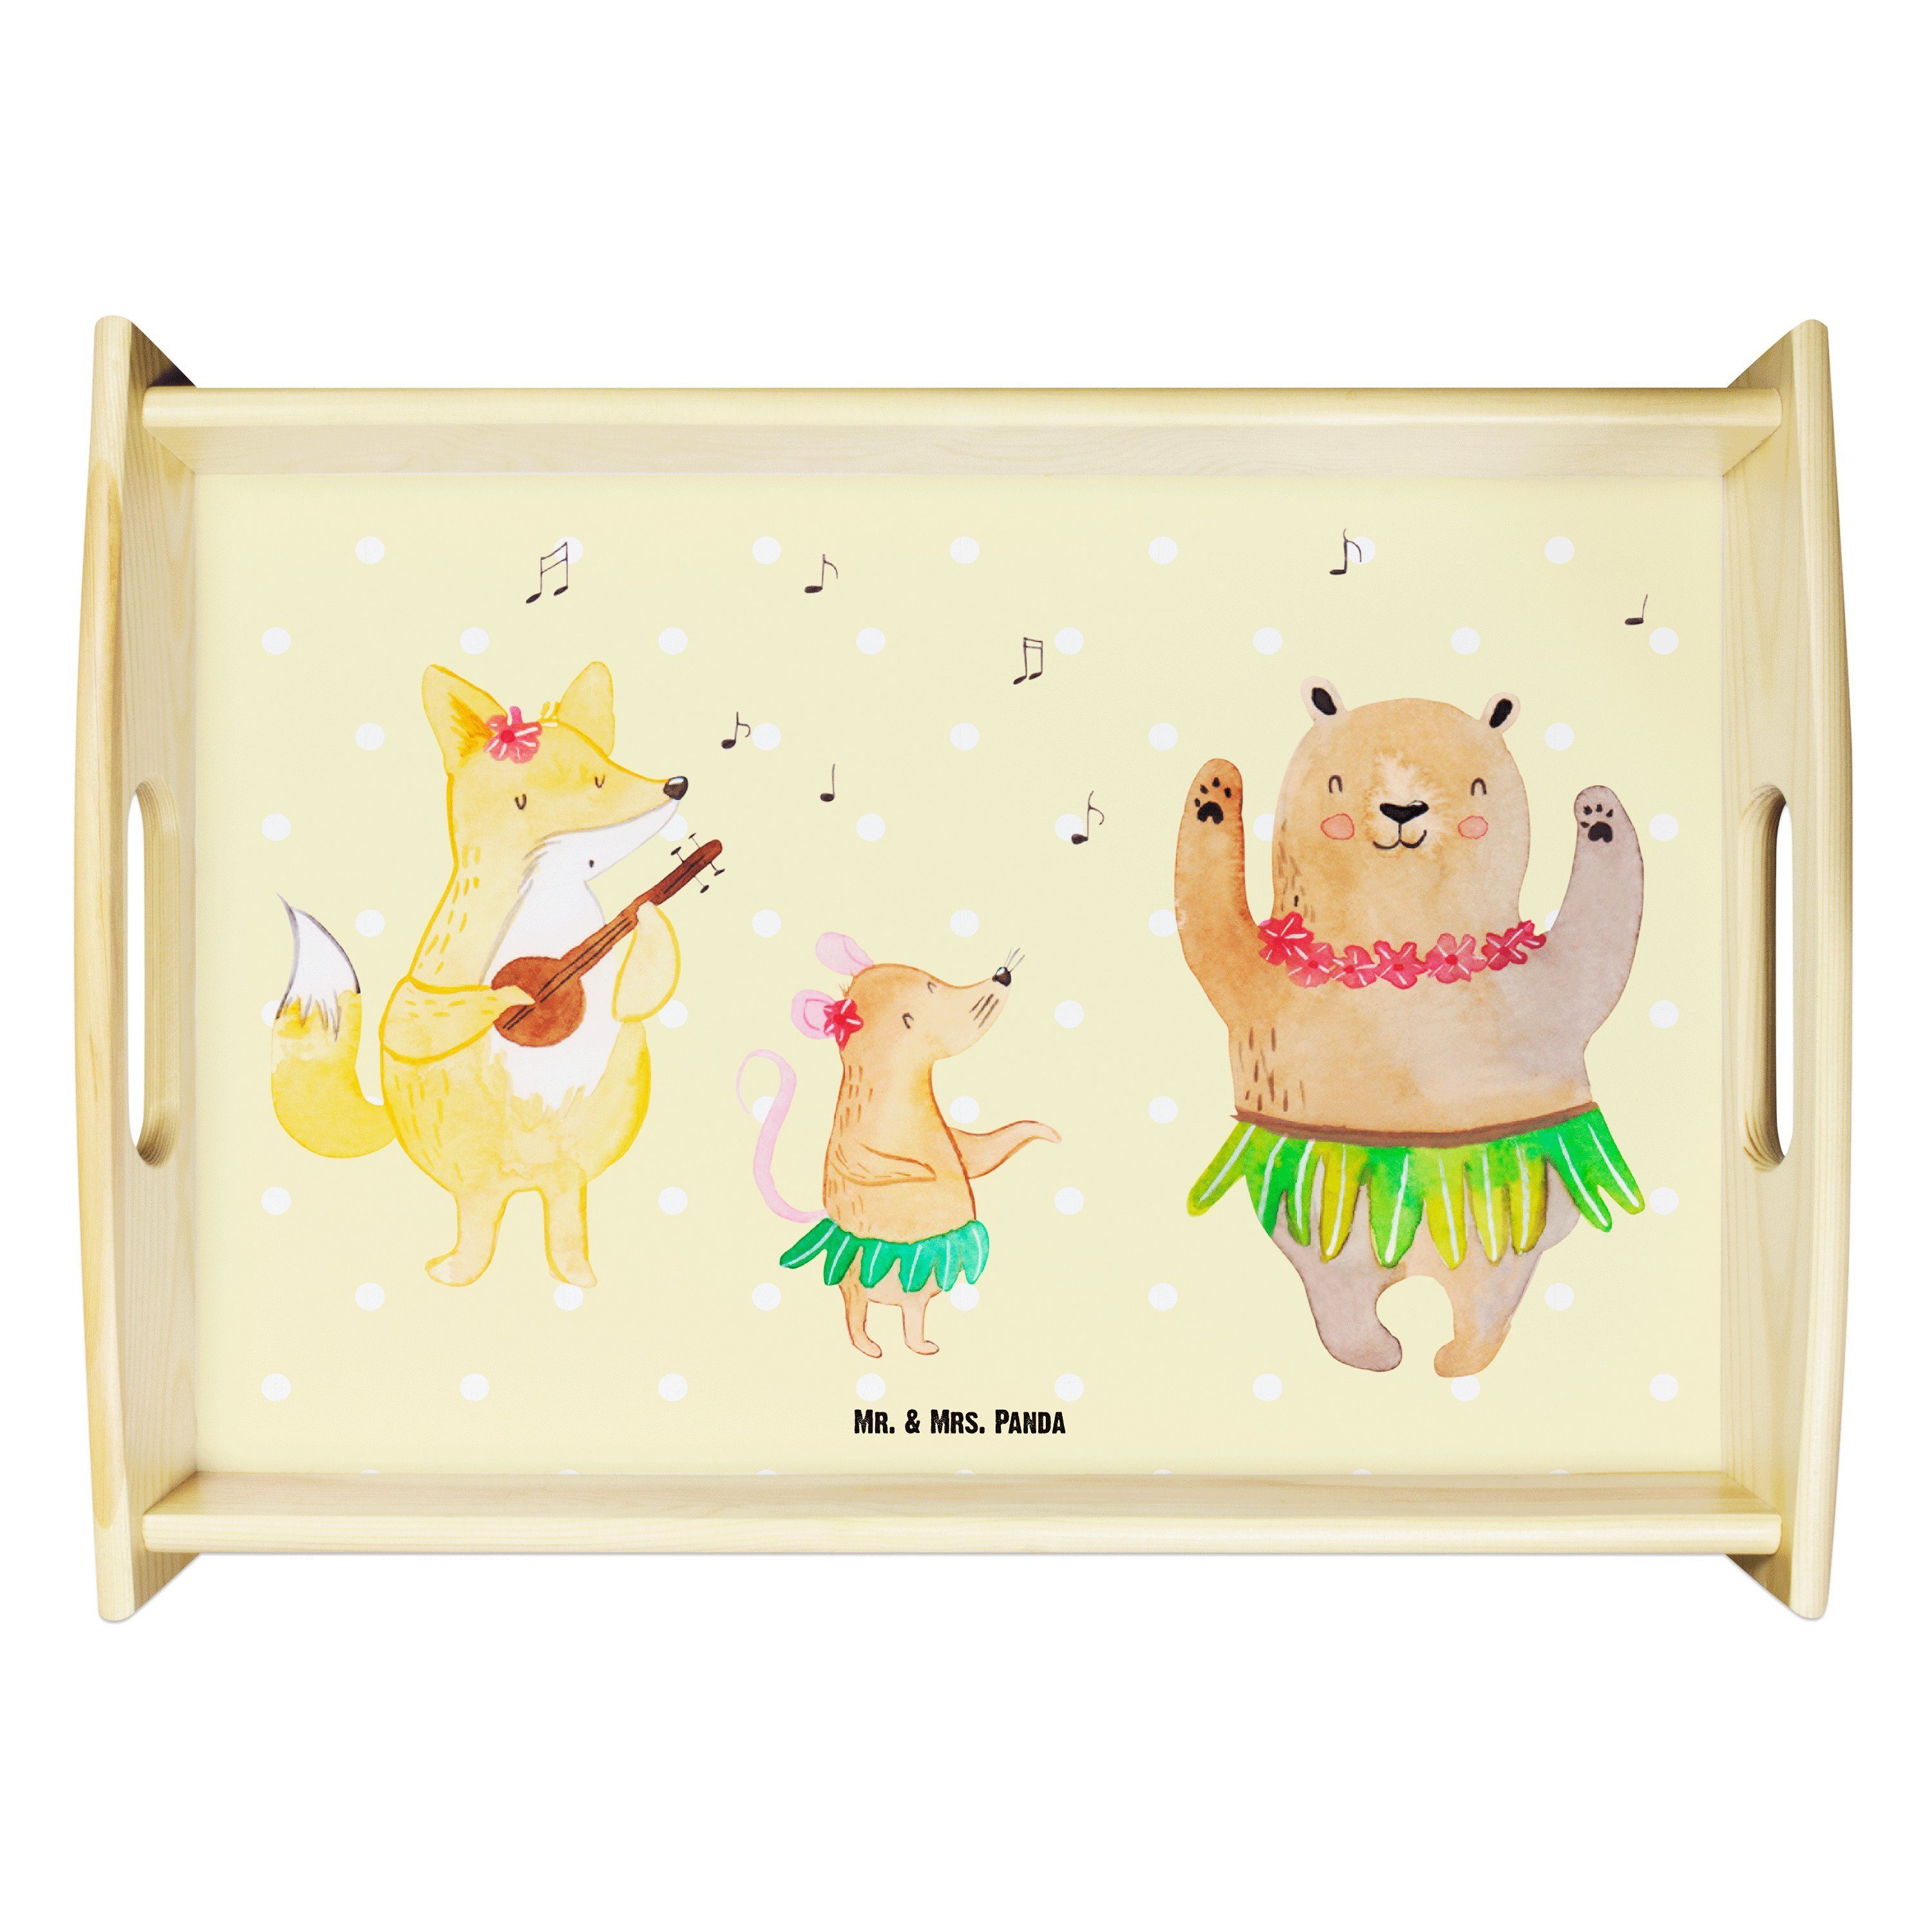 Mr. & Mrs. Panda Tablett Waldtiere Aloha - Gelb Pastell - Geschenk, lustige Sprüche, Igel, Küc, Echtholz lasiert, (1-tlg)